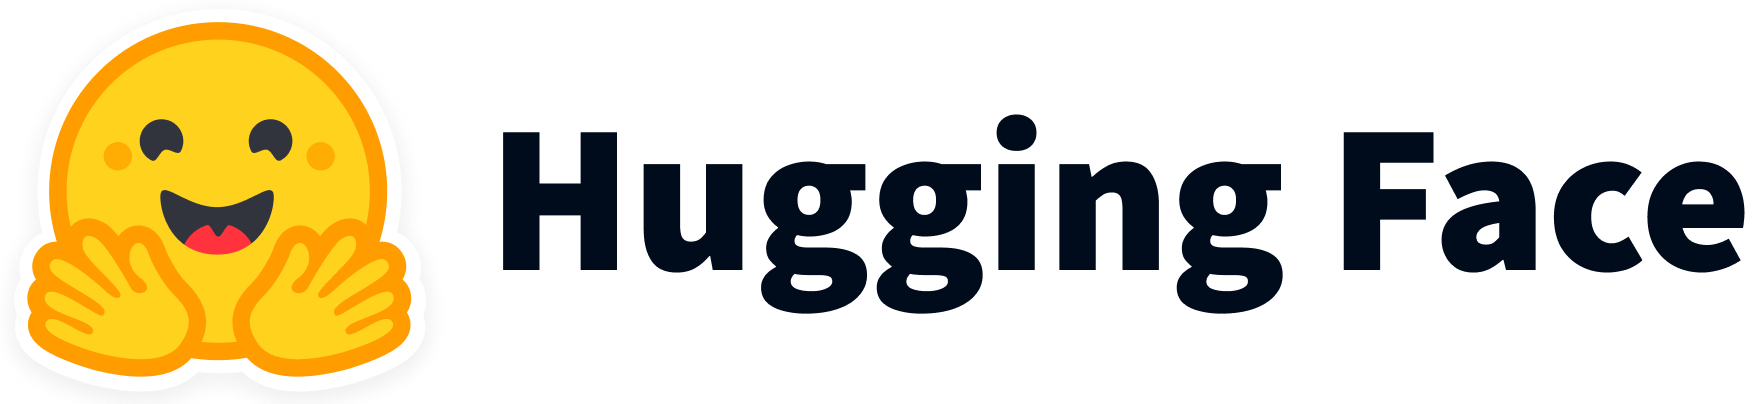 Hugging Face Logo